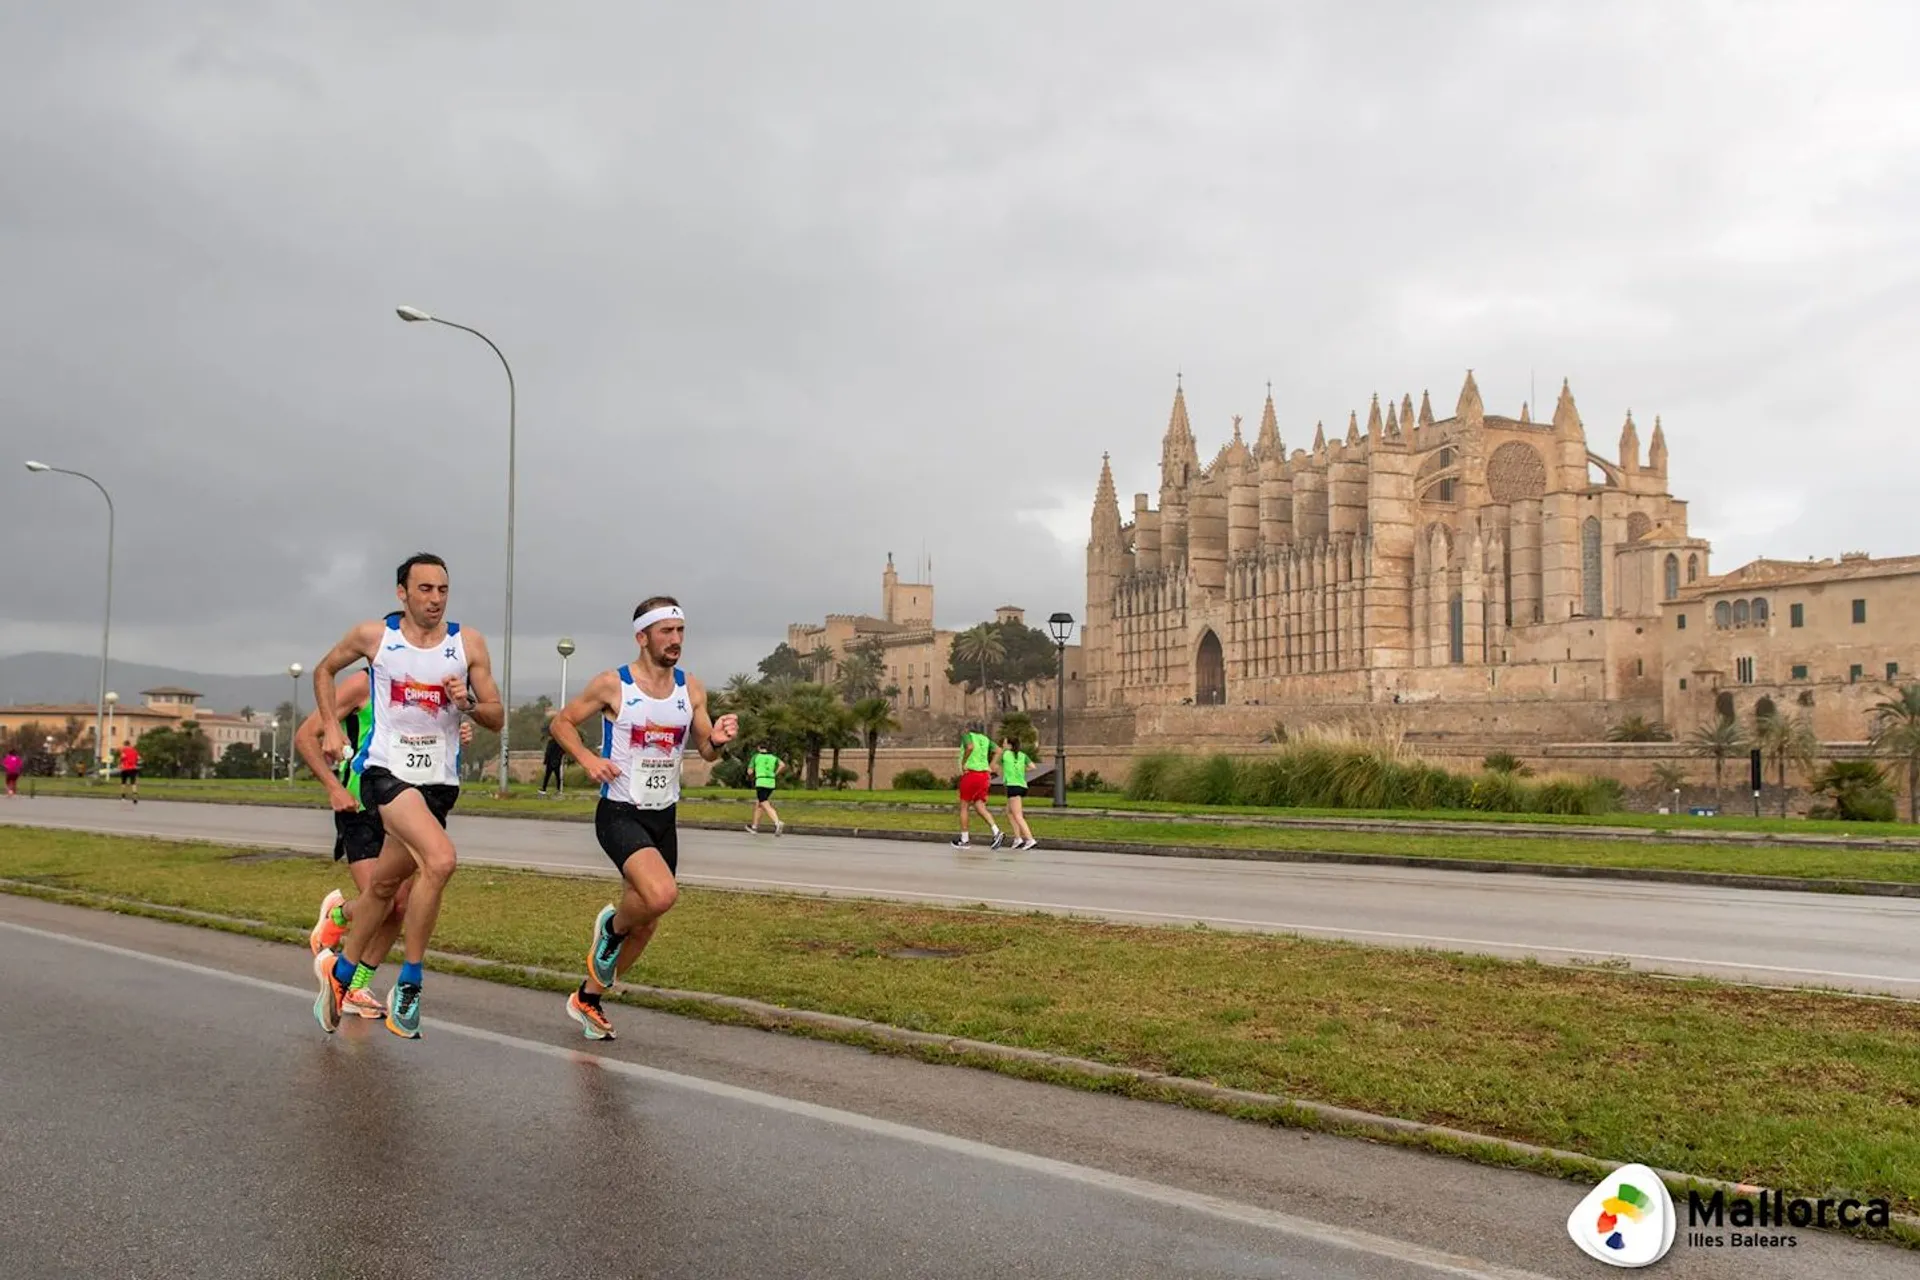 Caixabank Palma Half Marathon & 10K